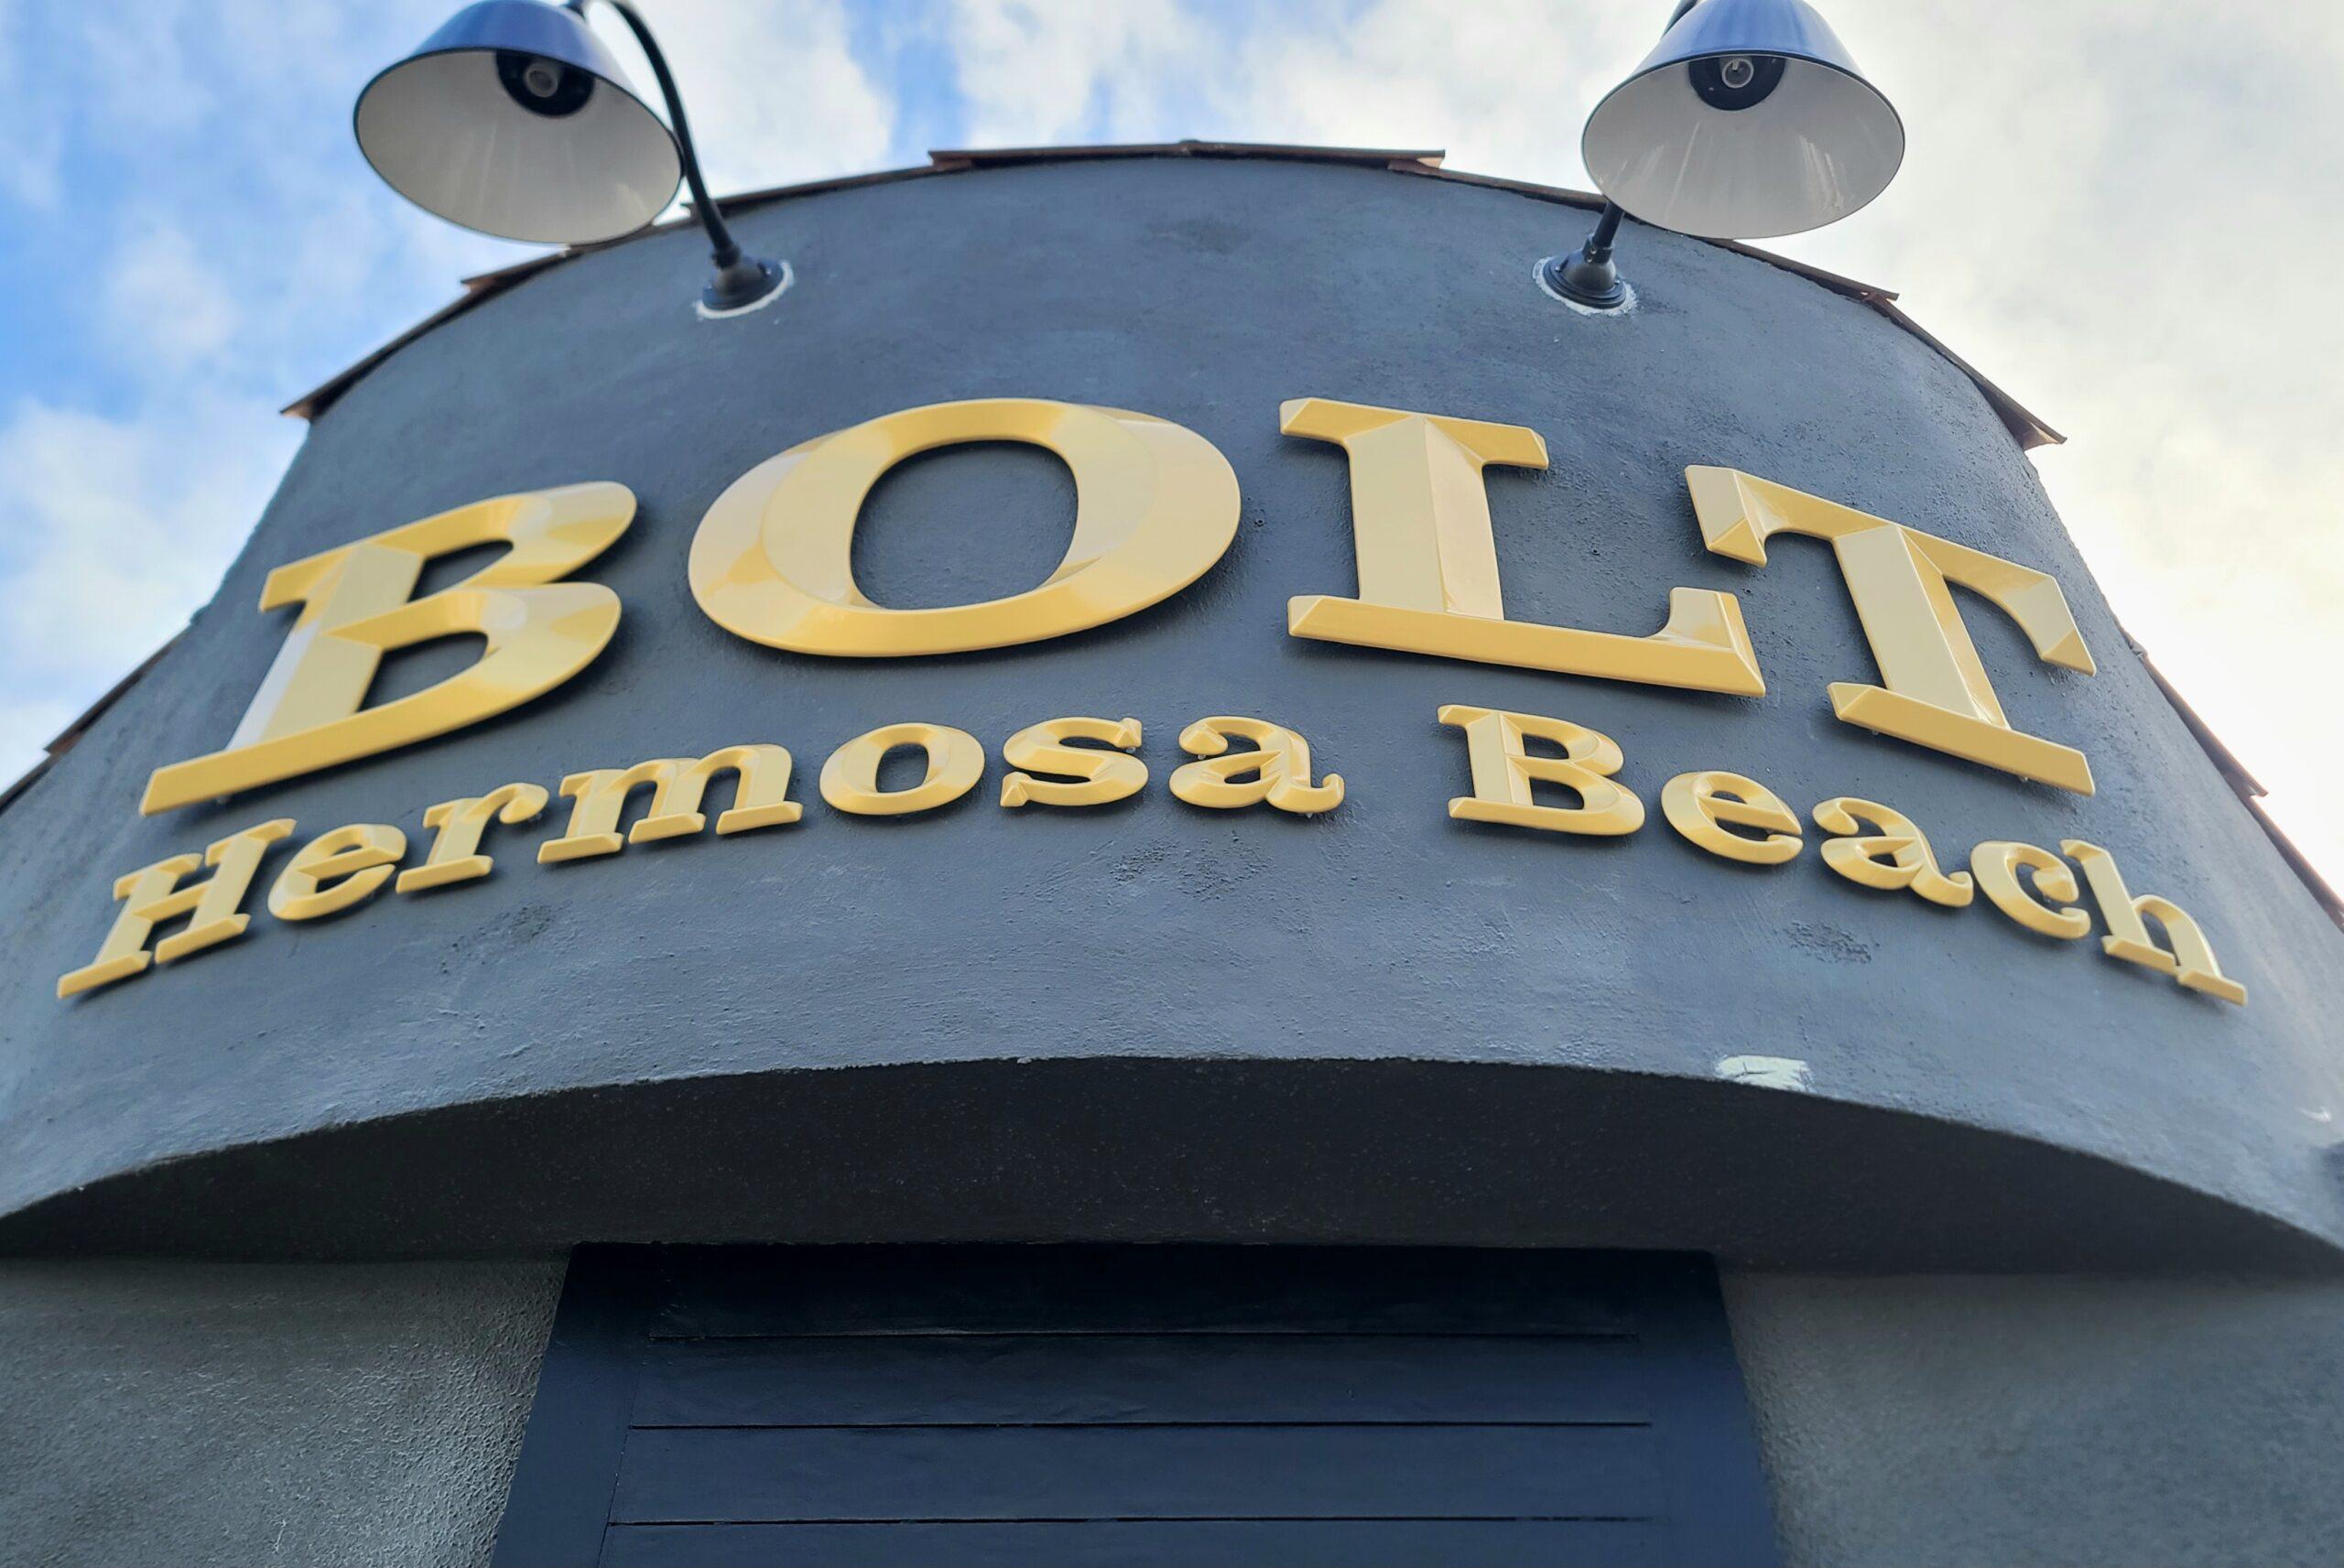 Three Dimensional Unlit Sign for Bolt Hermosa Beach